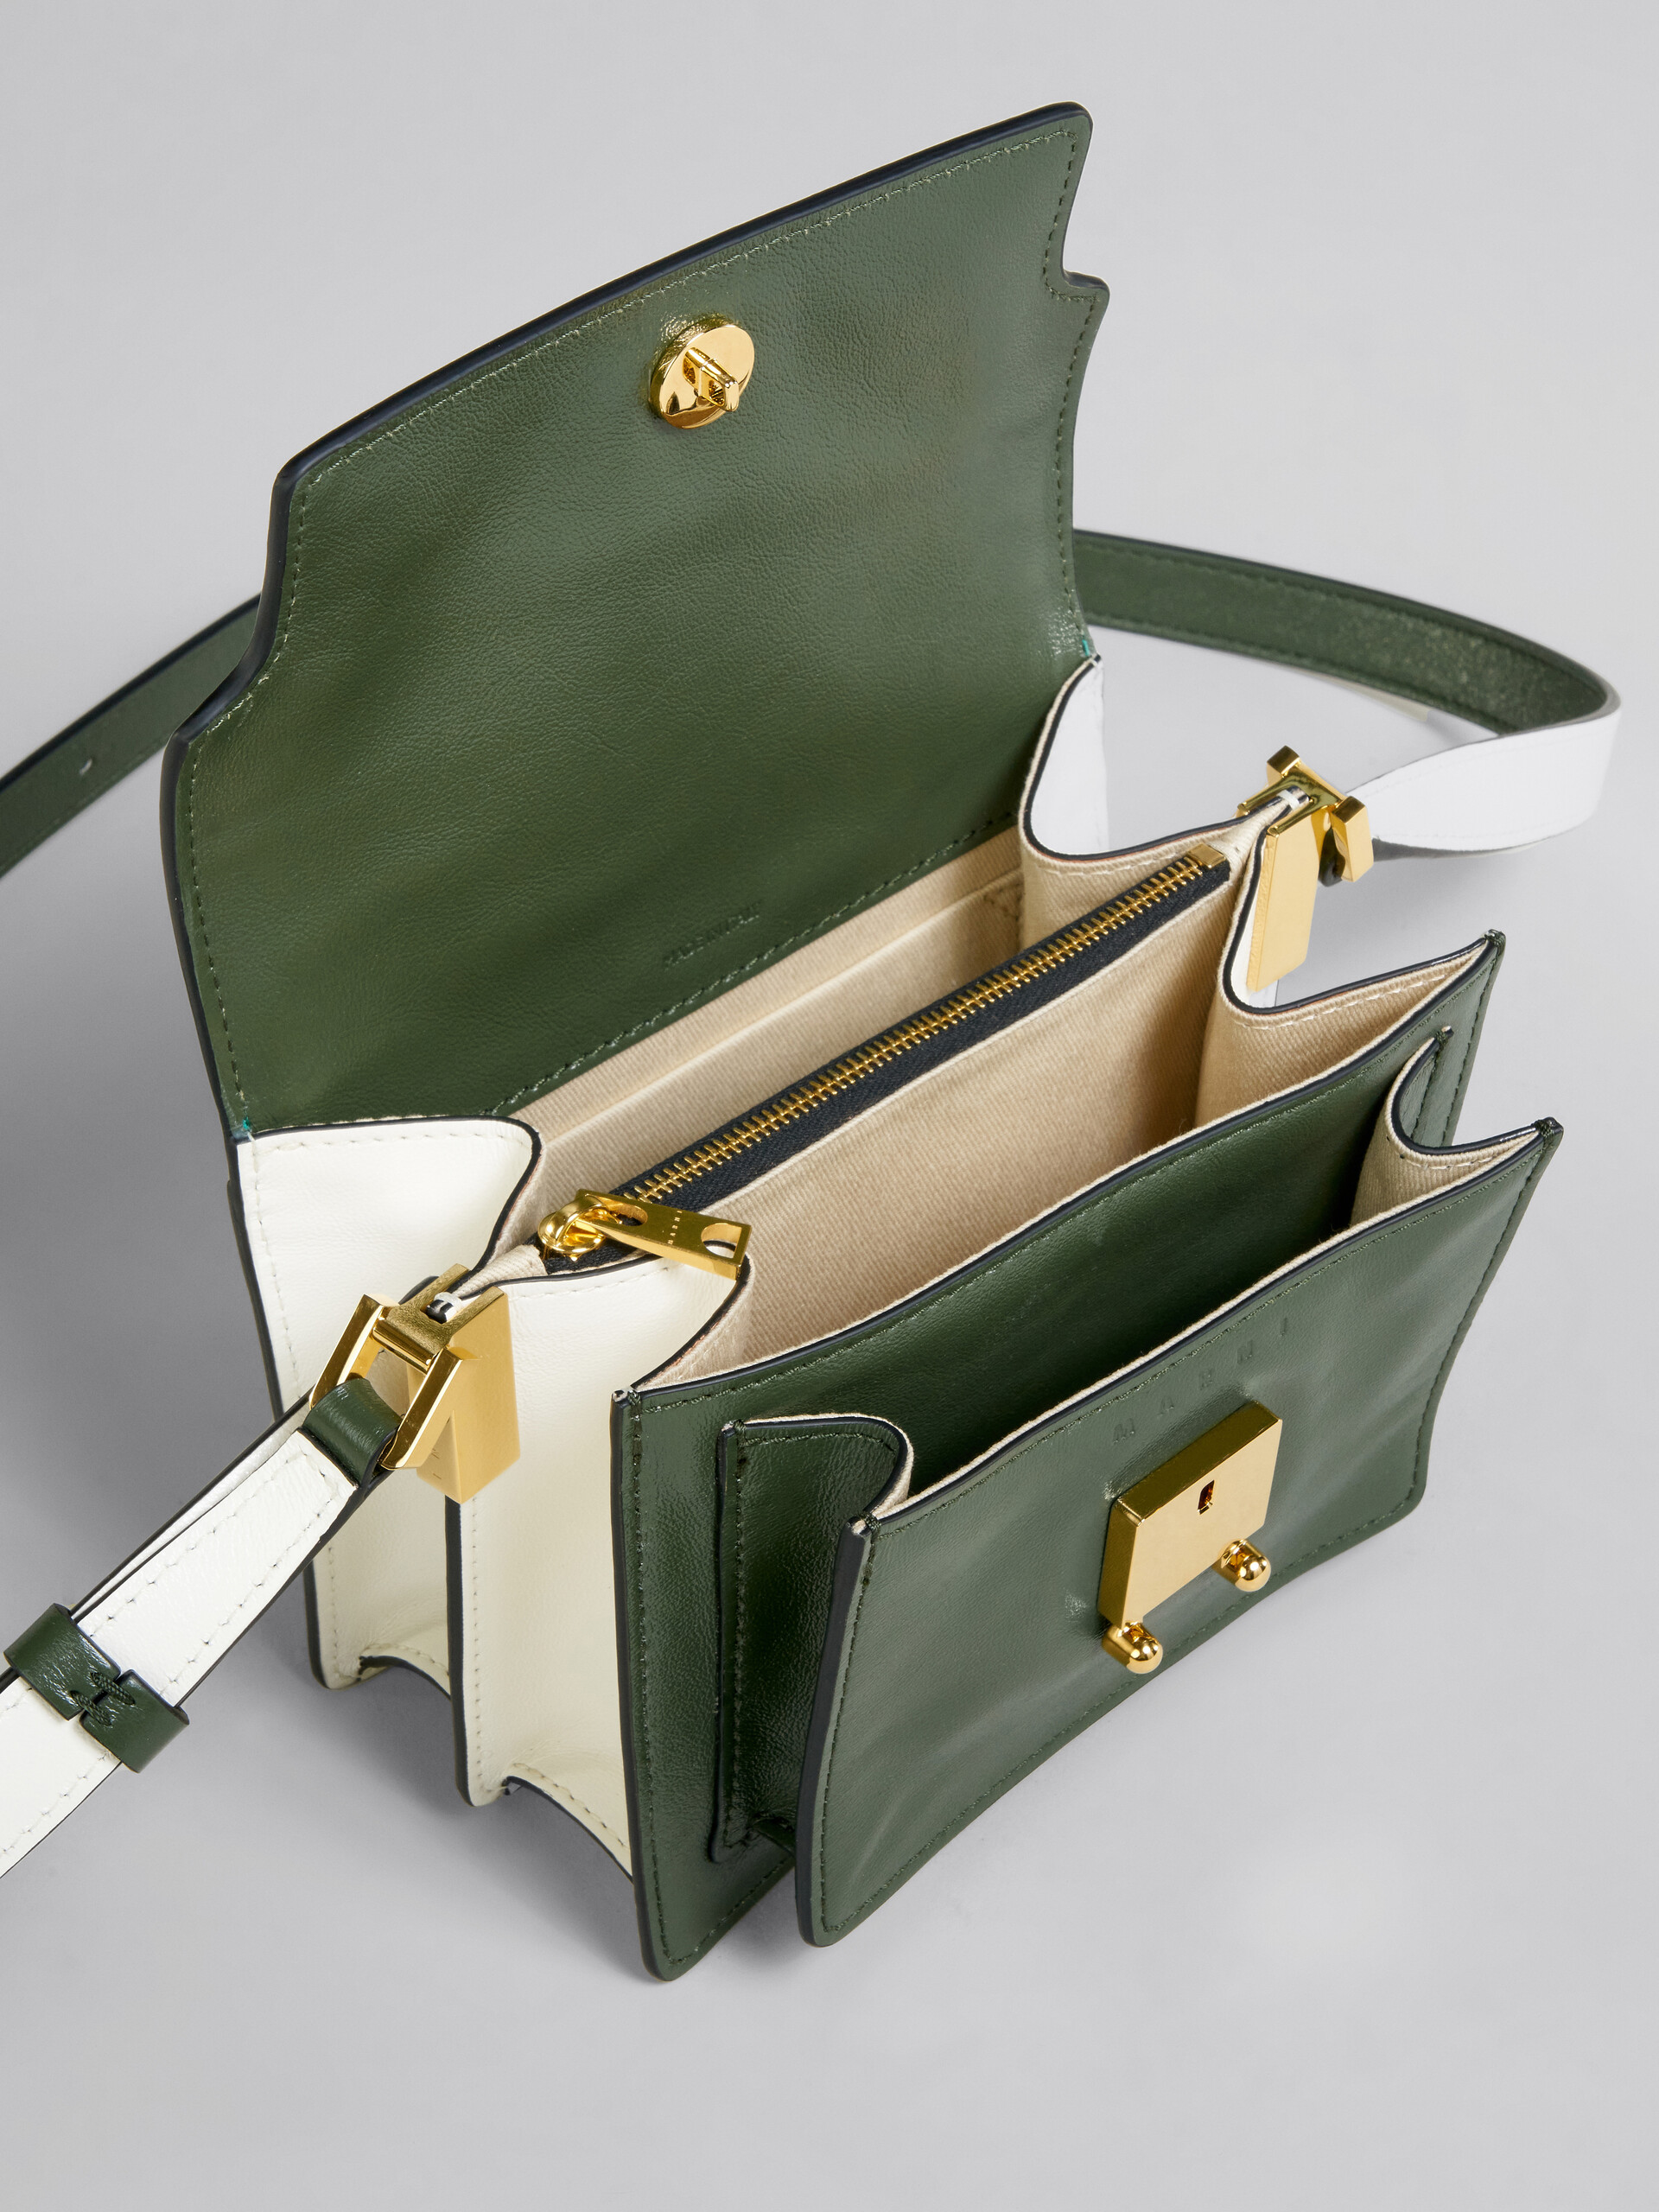 Marni Trunk Medium Leather Shoulder Bag in Green